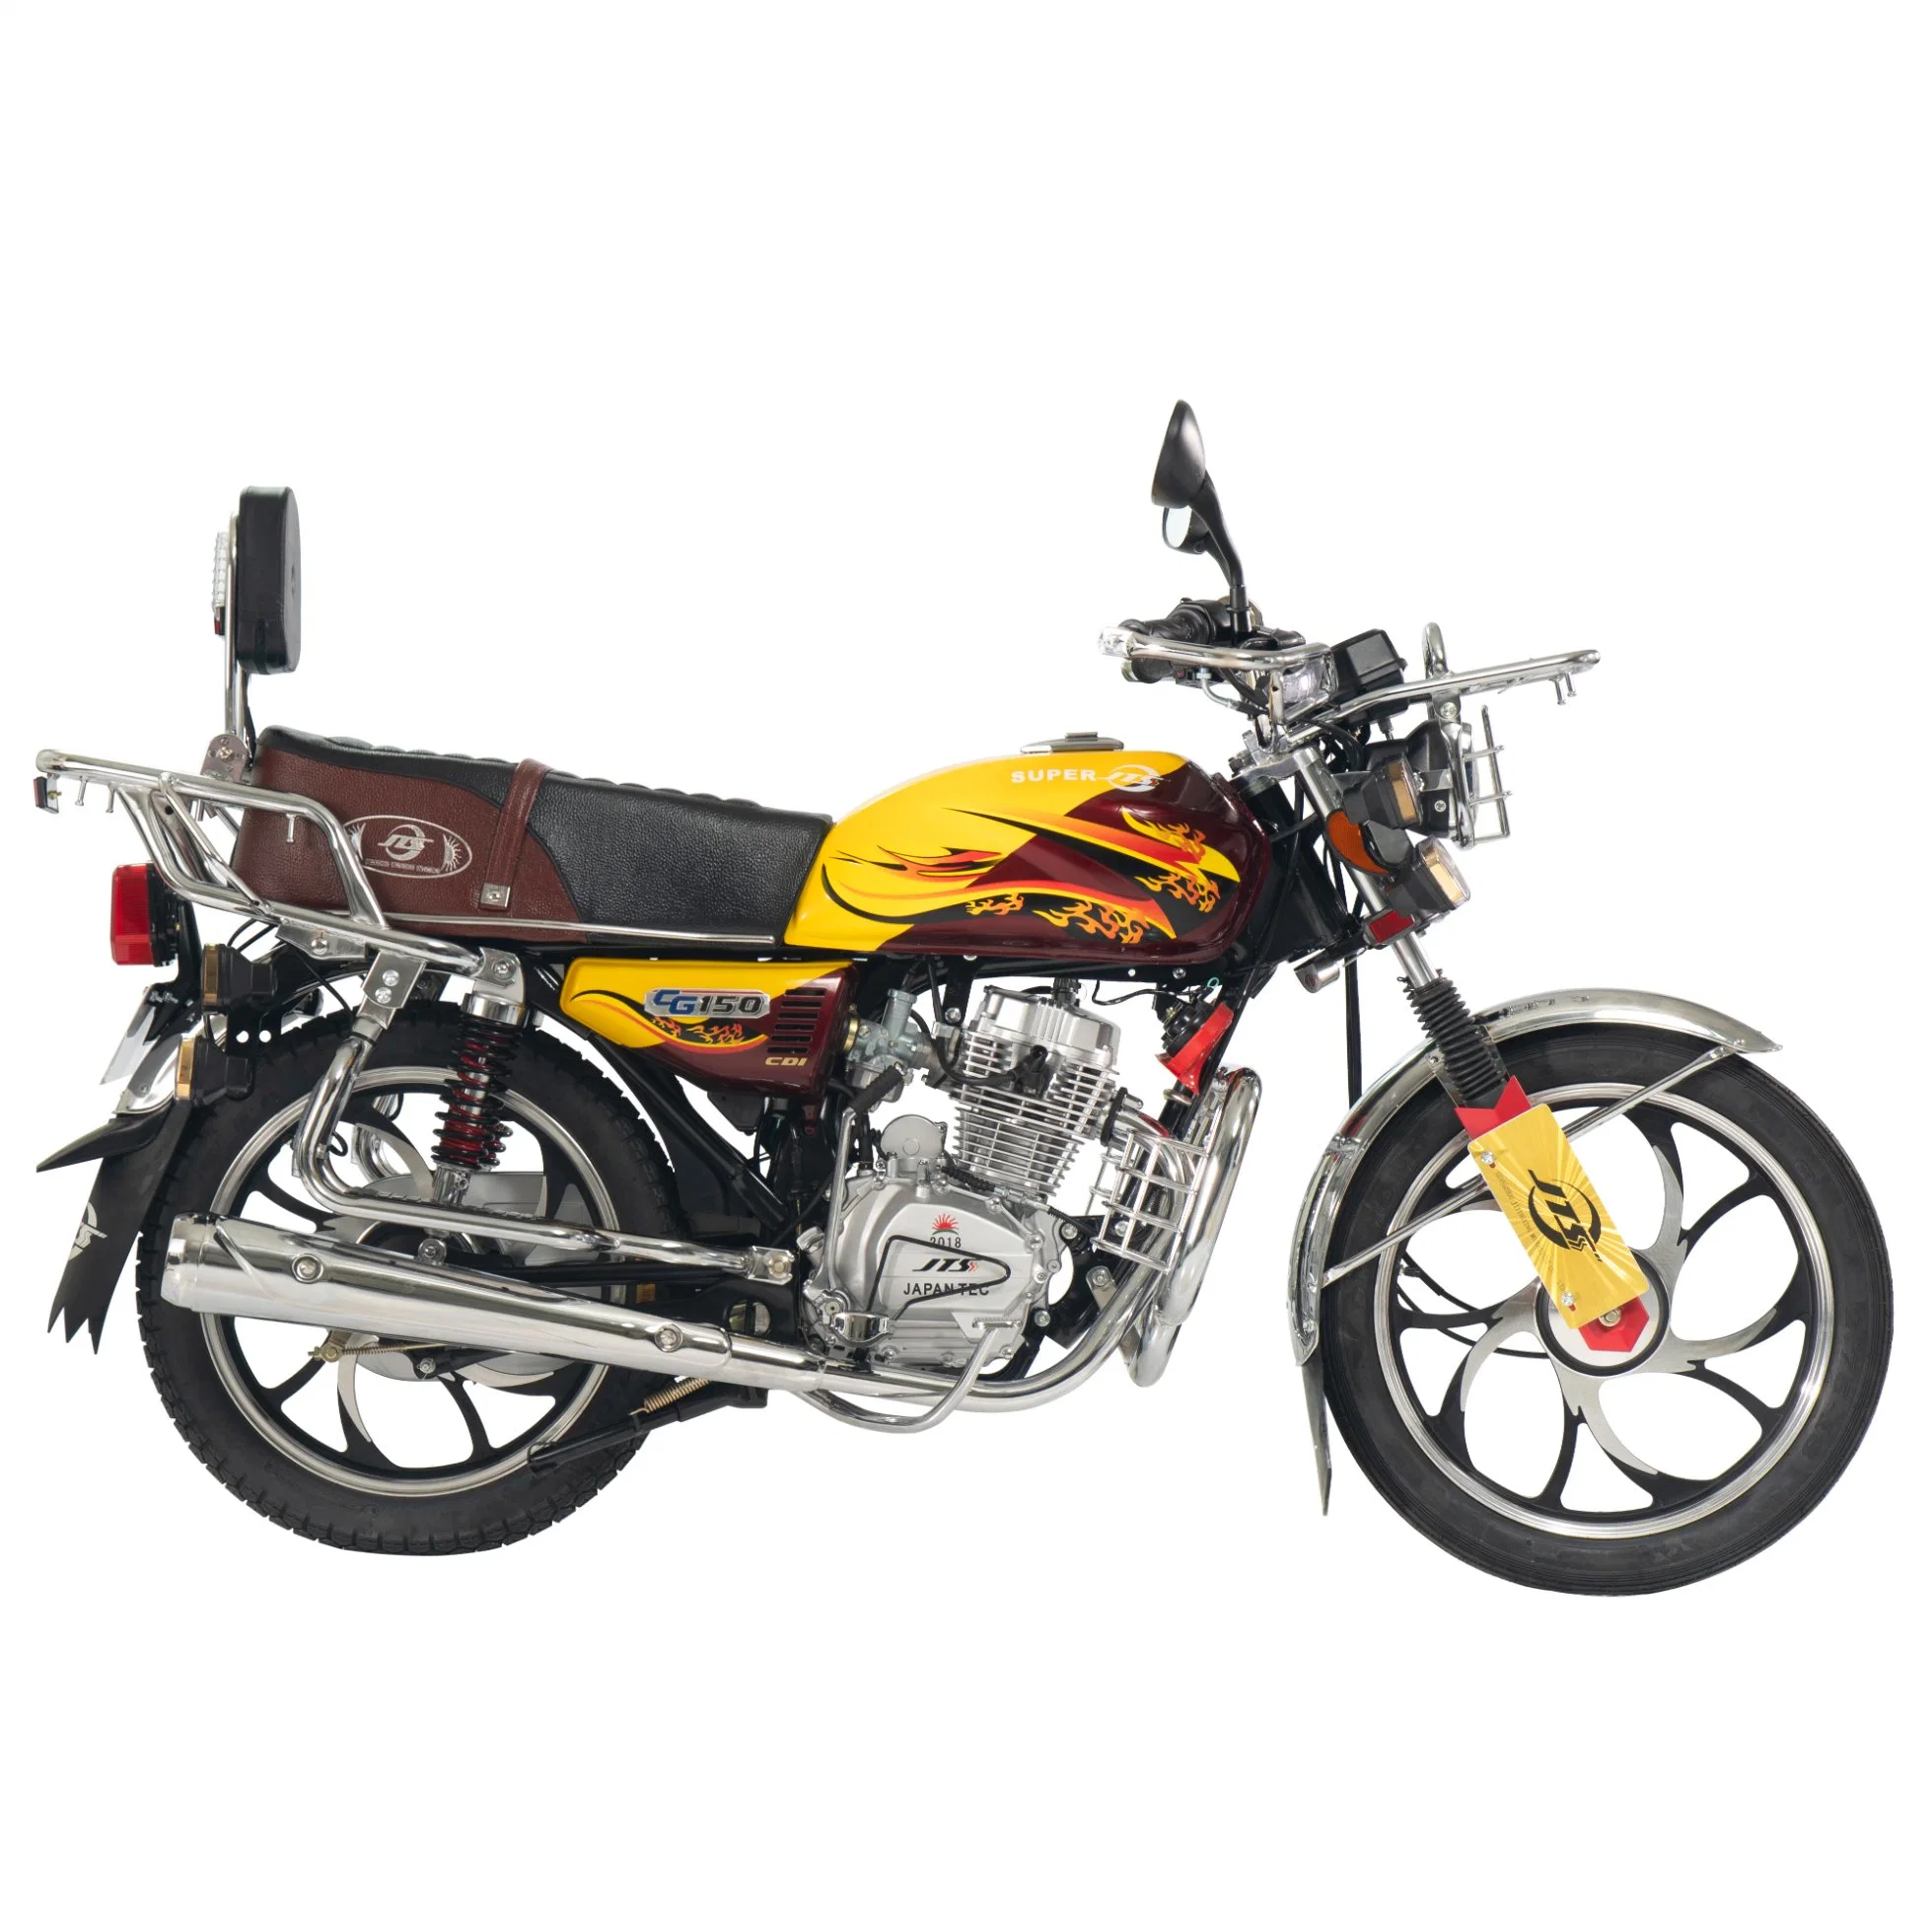 Tigre CG 150 cc Moto / 250 cc Dirt Bike / Sport دراجة بخارية / مركبة كهربائية